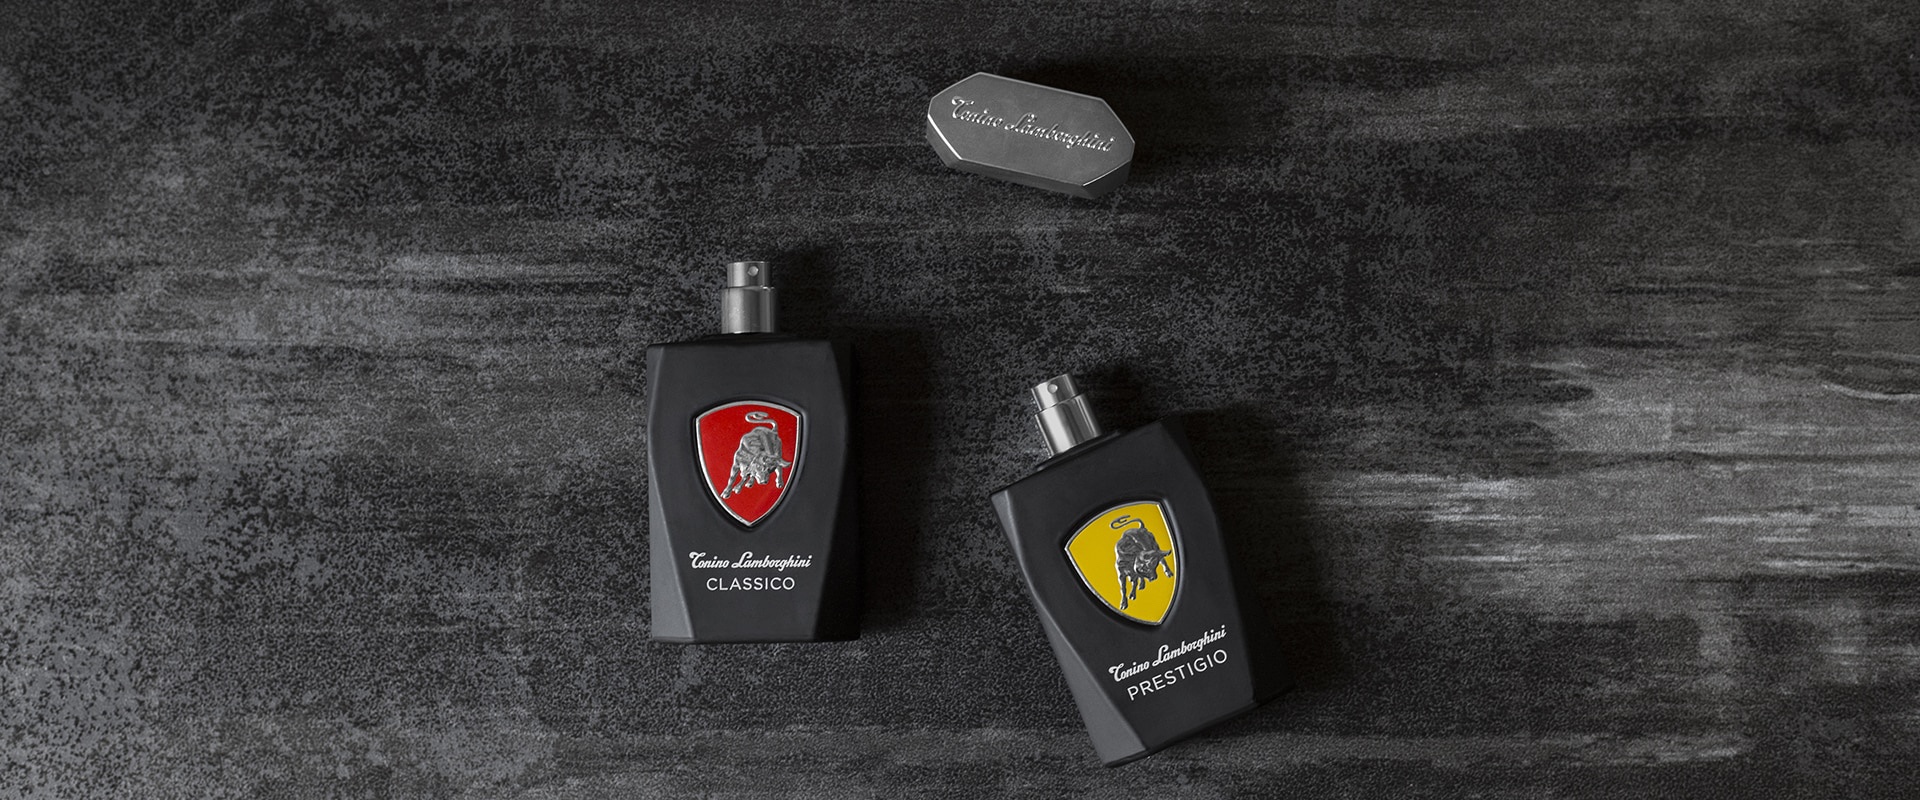 salud y belleza - Perfume Lamborghini 125 ml 4.2 onza